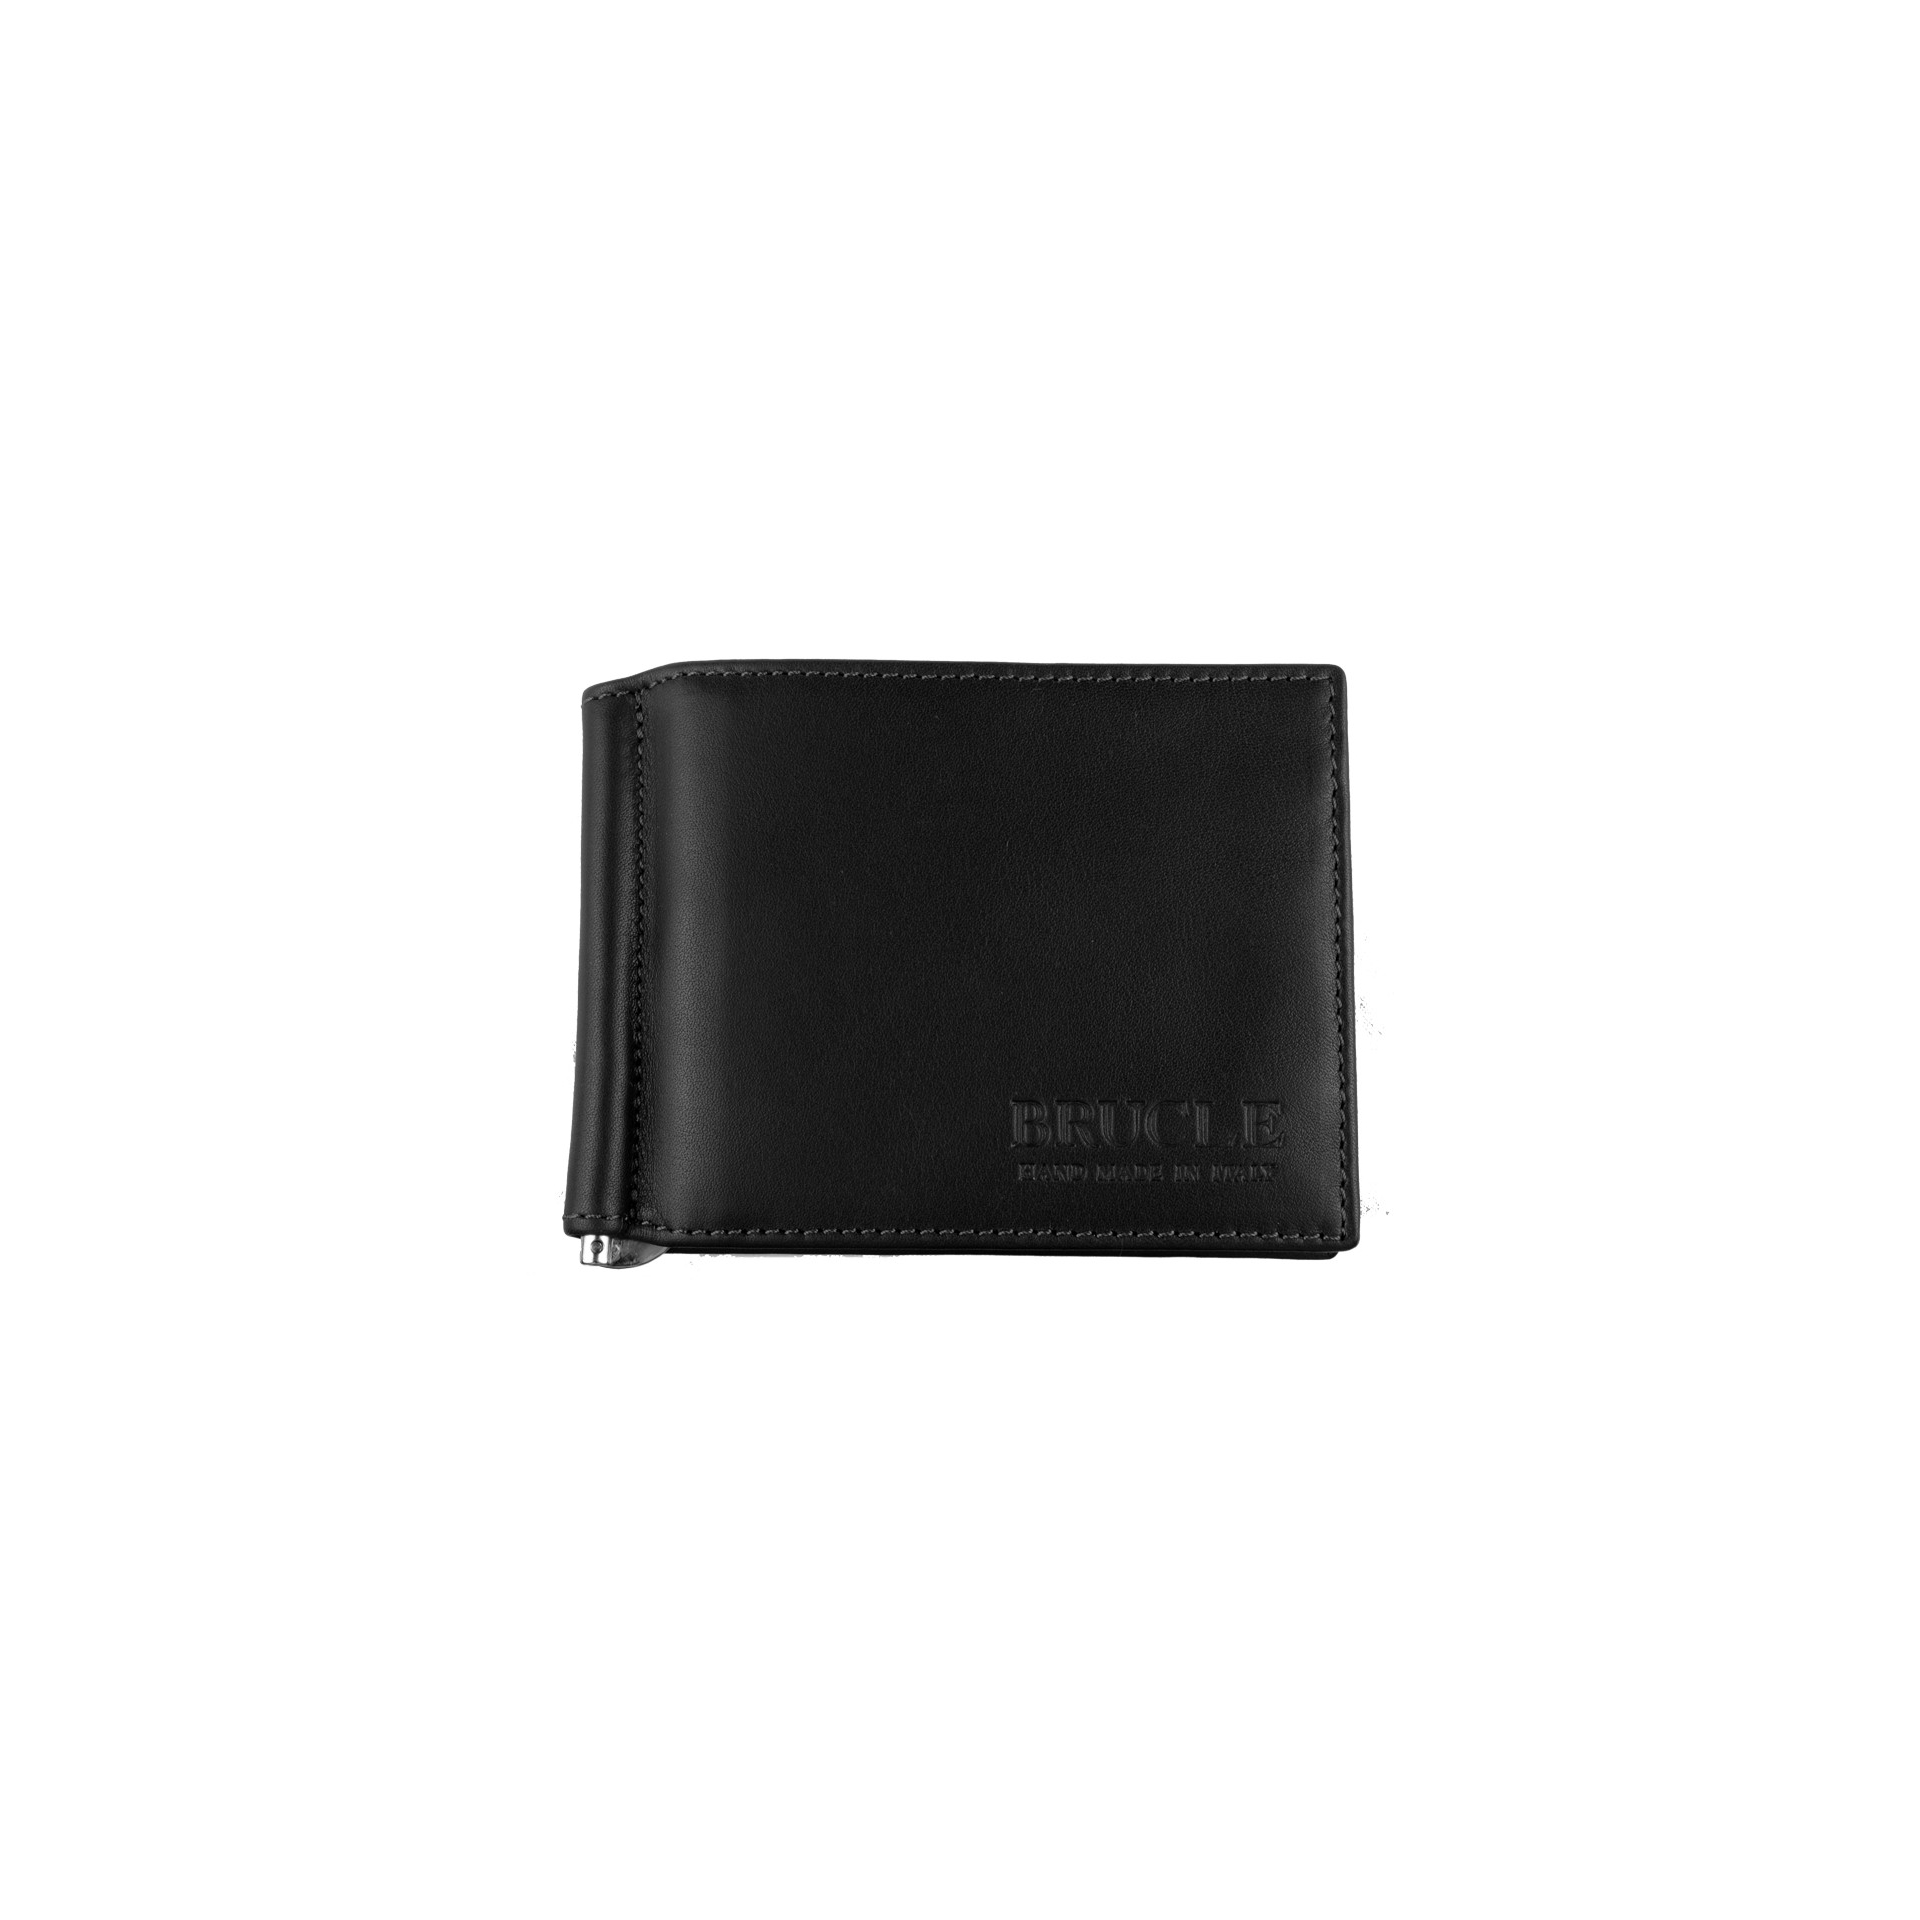 Money clip leather black wallet